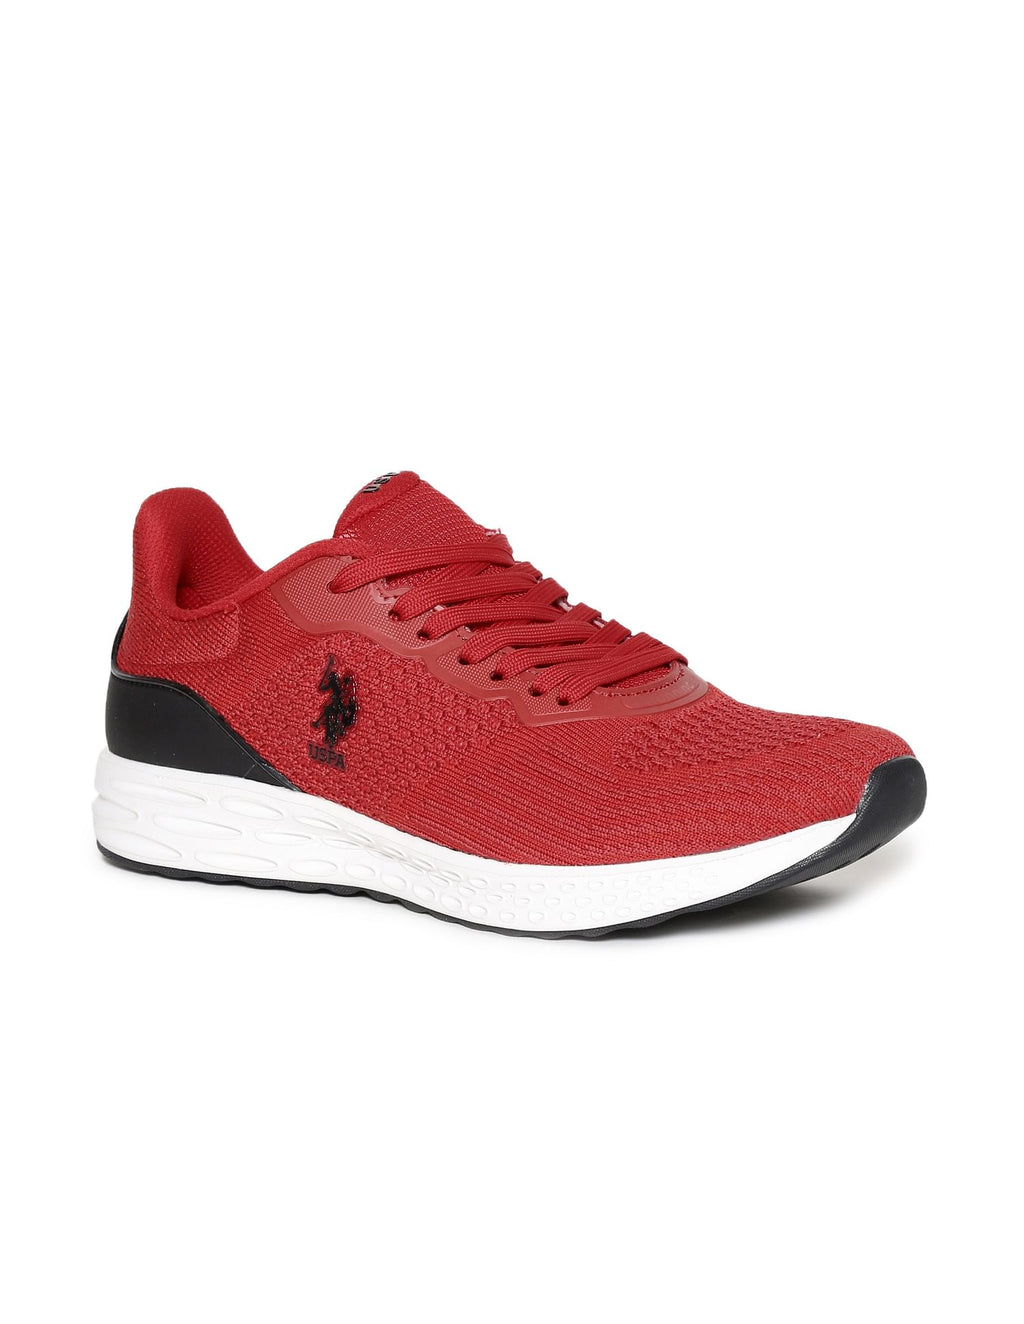 Polo Ralph Lauren hi top court lux sneakers in black/red with pony logo |  ASOS